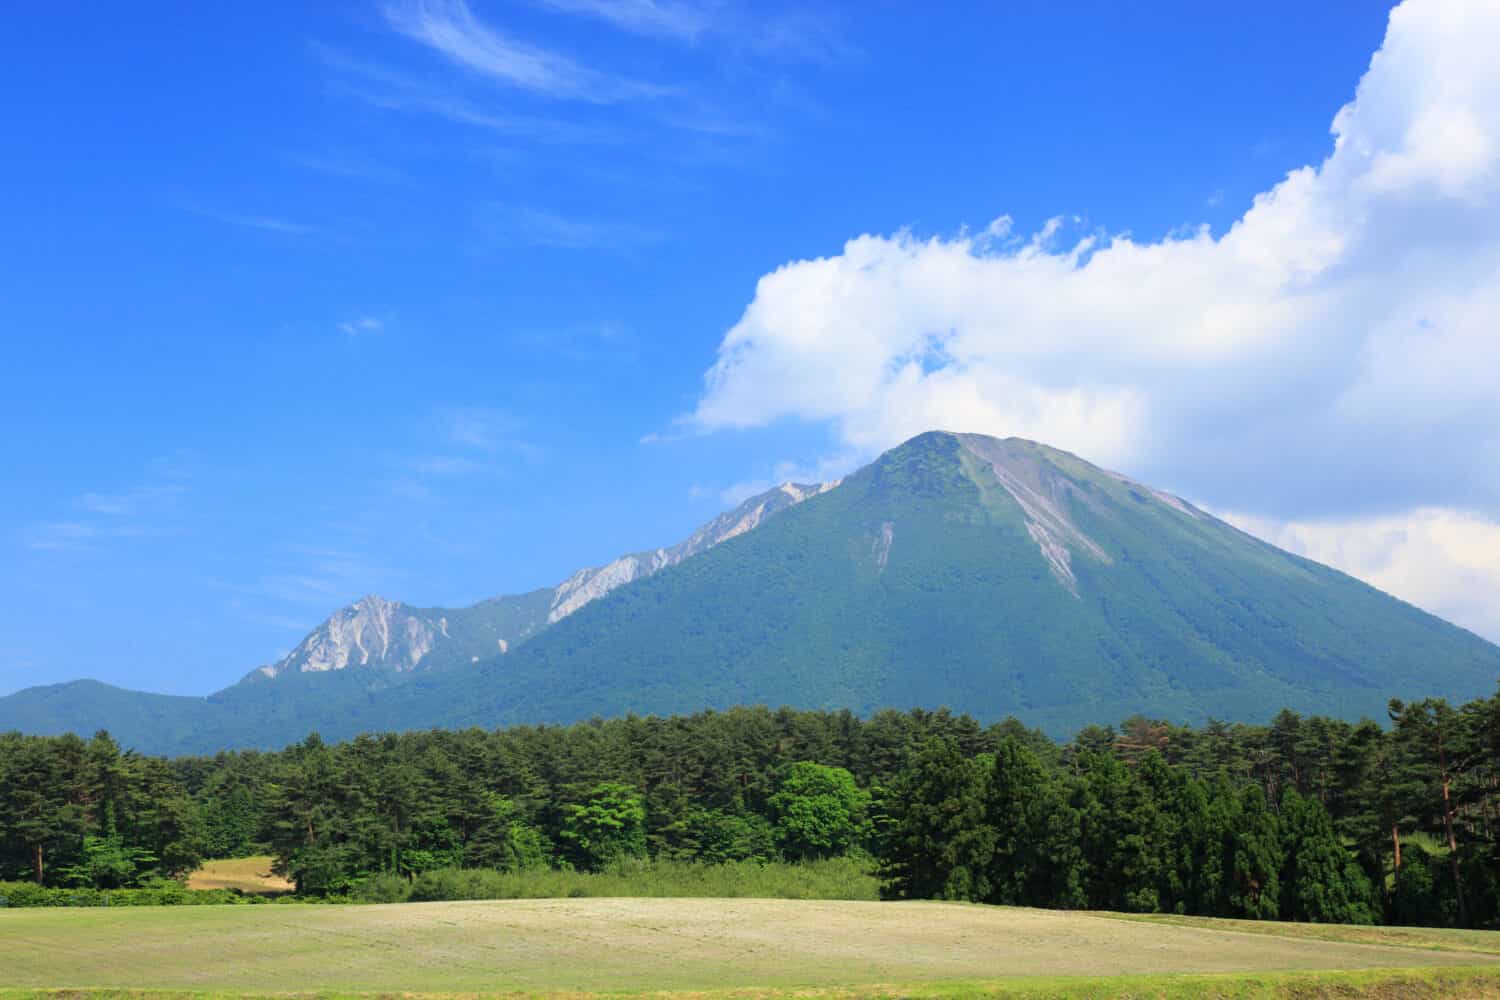 Mt. daisen in tottori prefecture japan